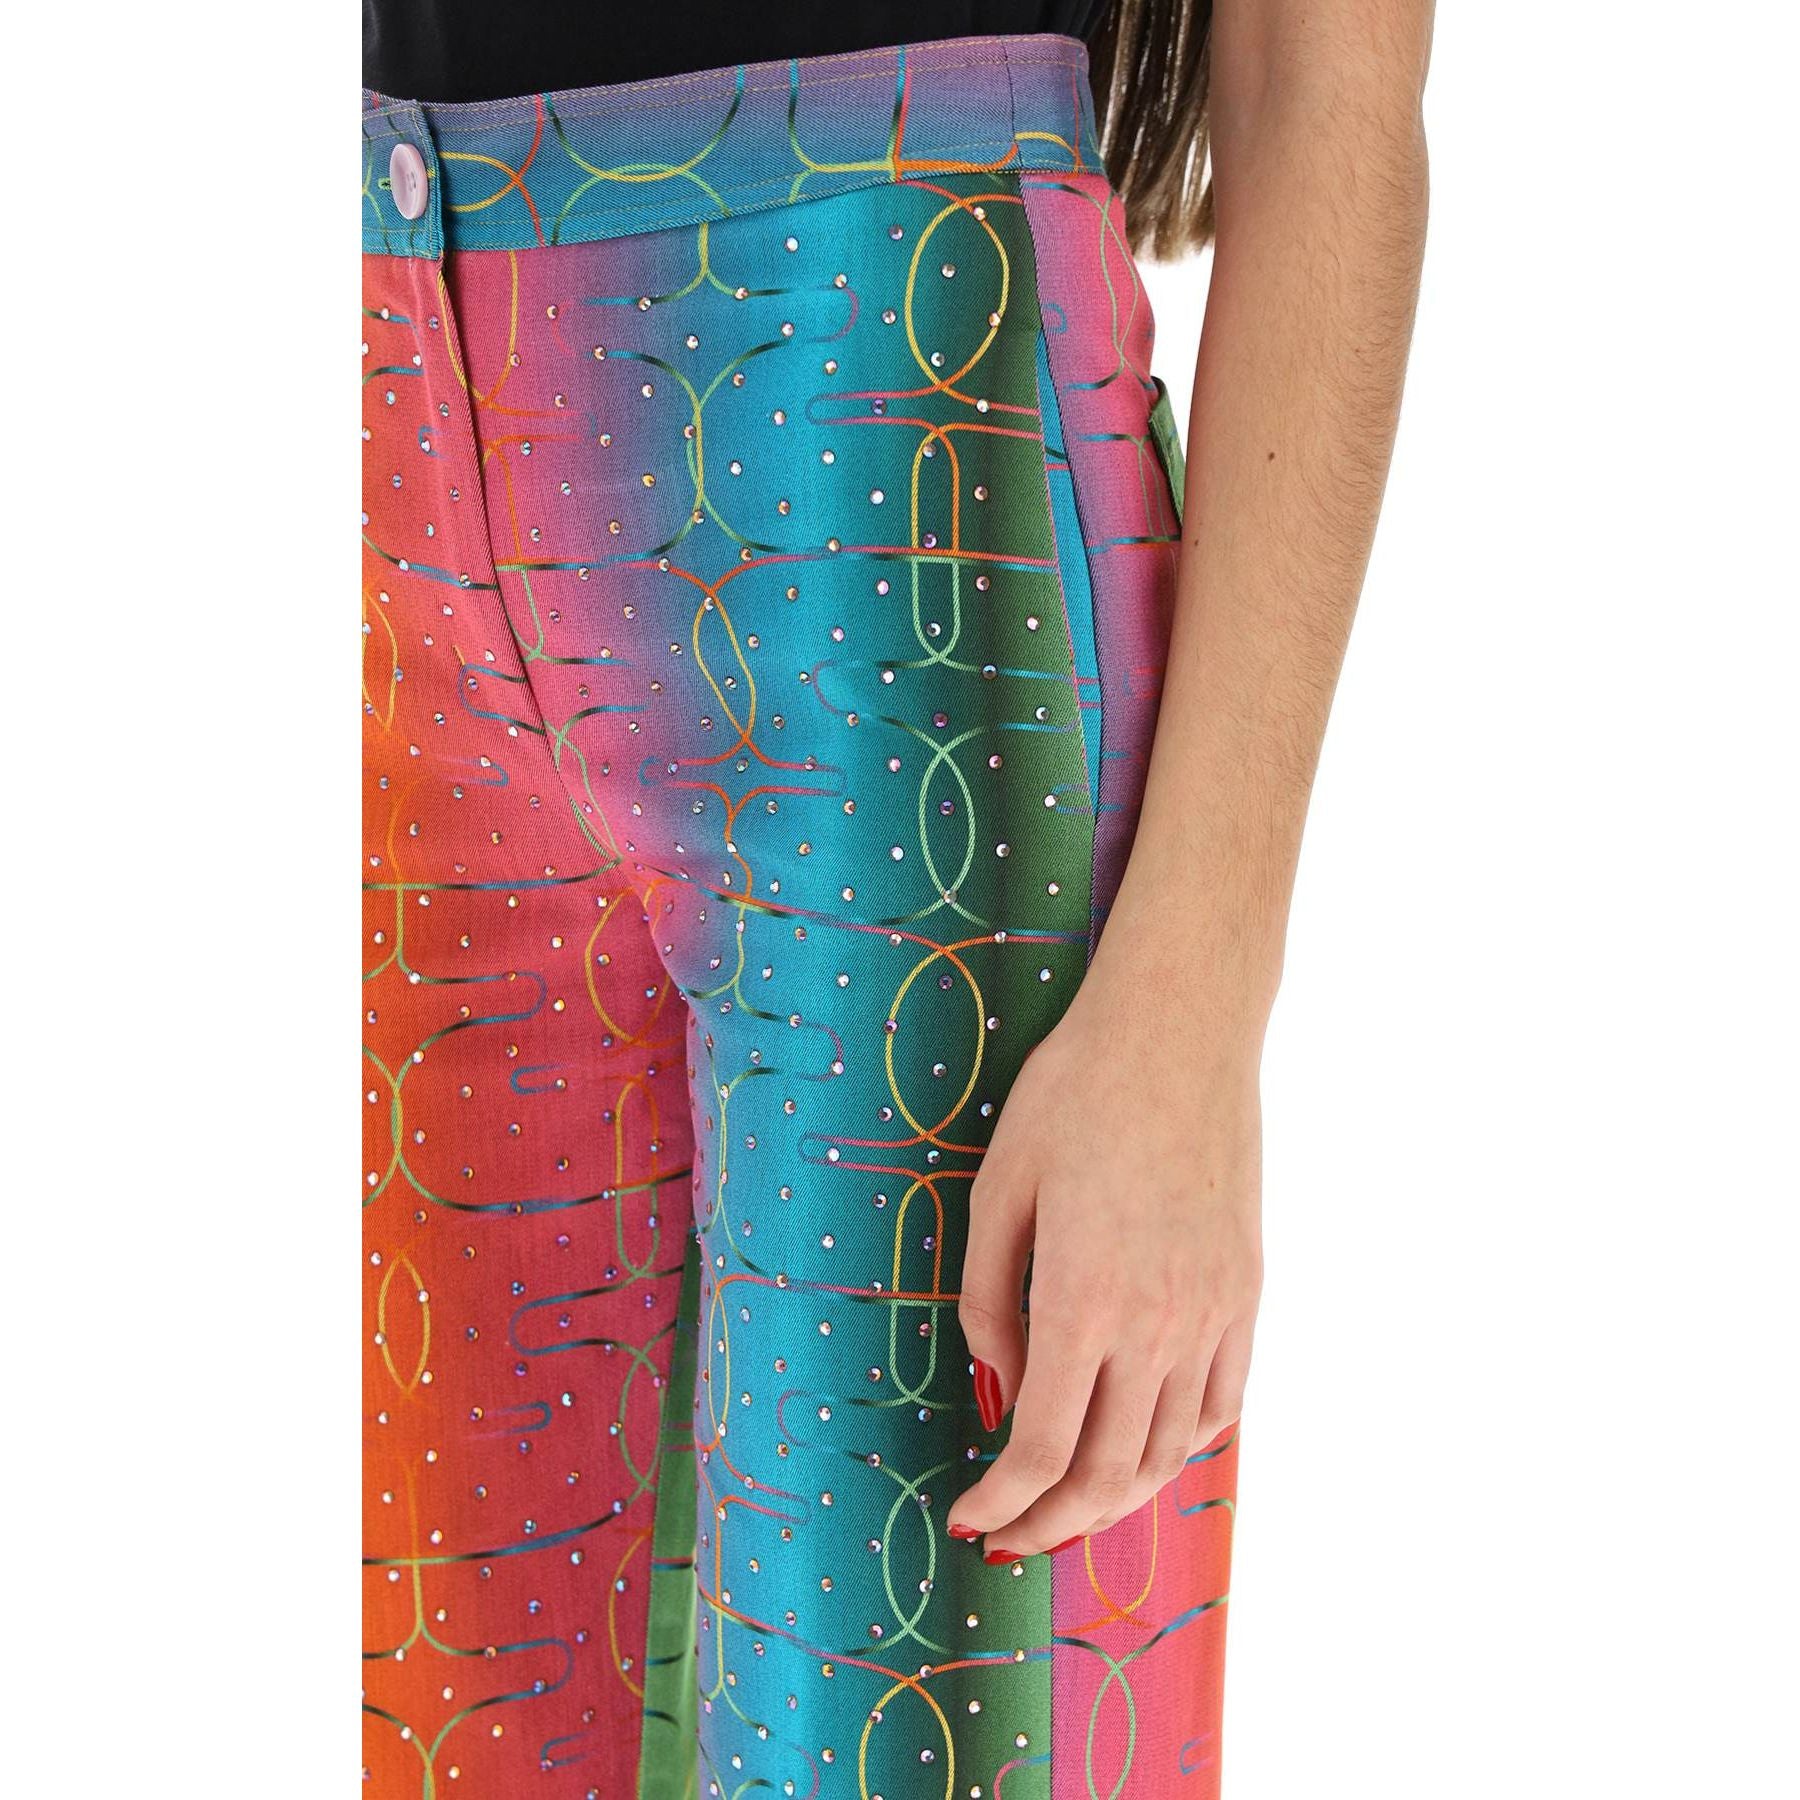 'Bery' Multicolor Rhinestone Pants